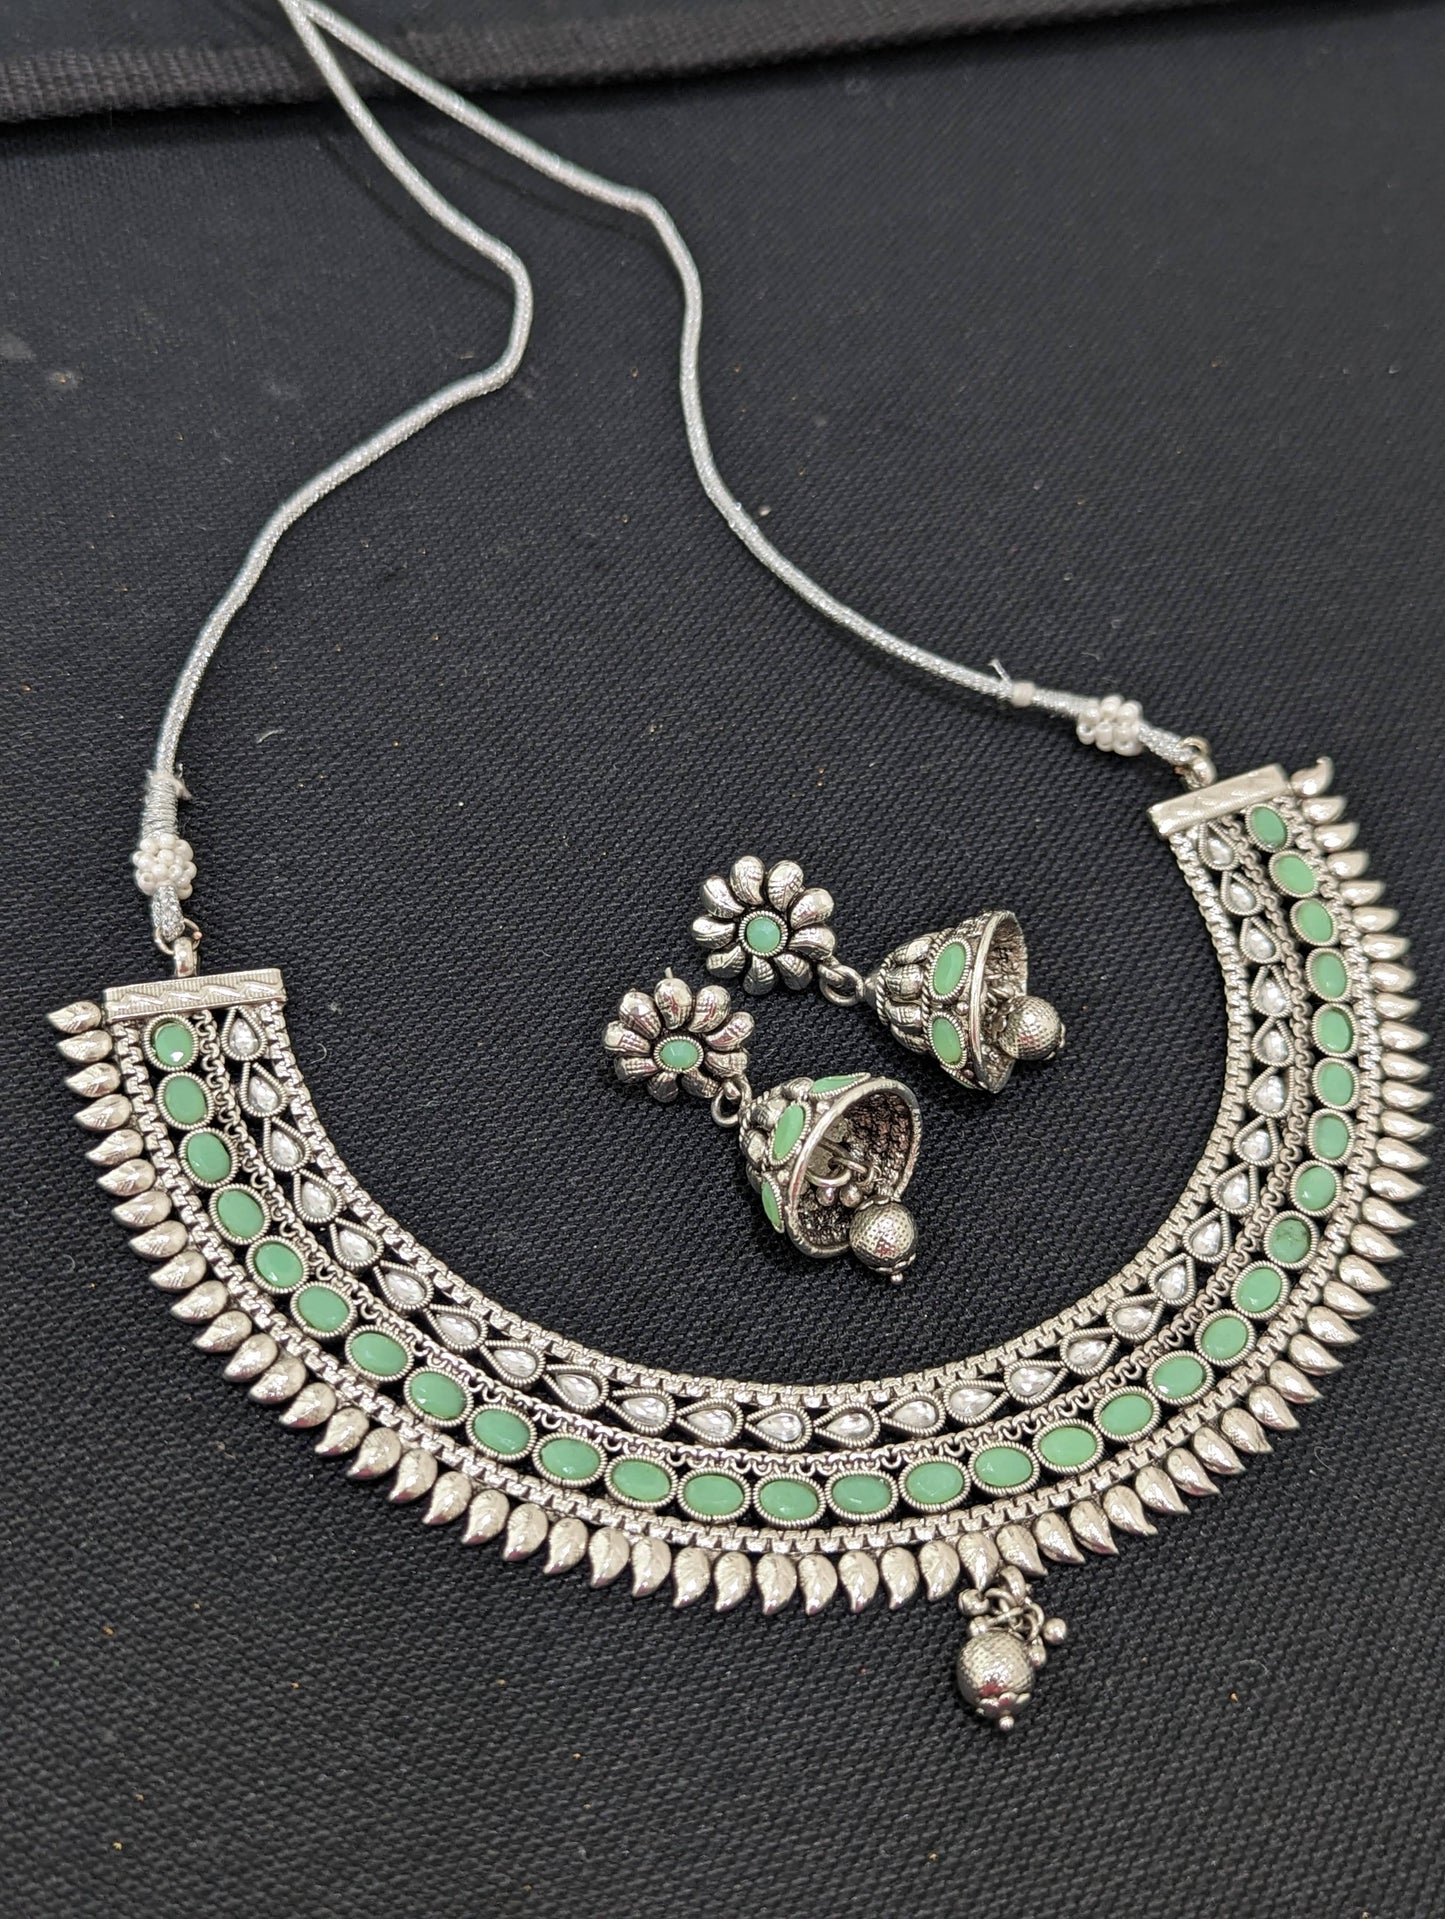 Oxidized silver Oval Polki stone choker Necklace set